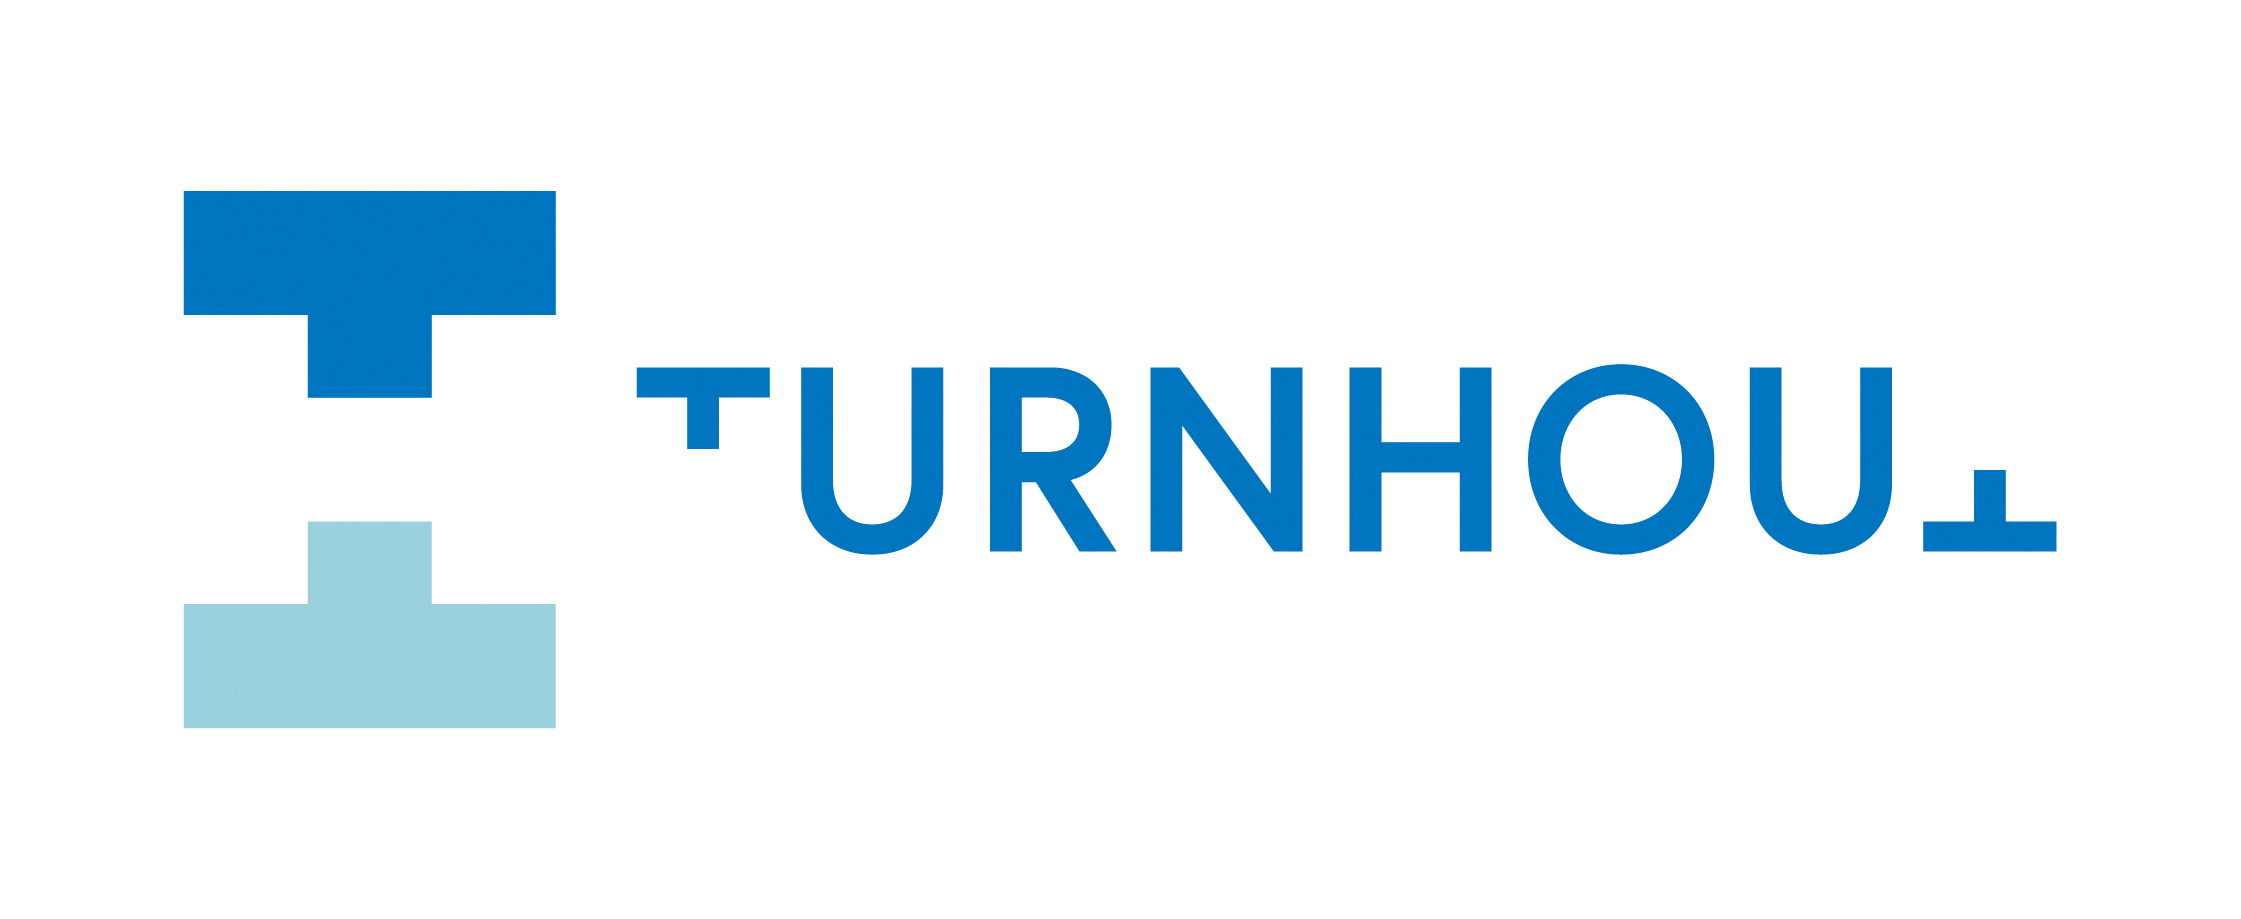 logo stad turnhout